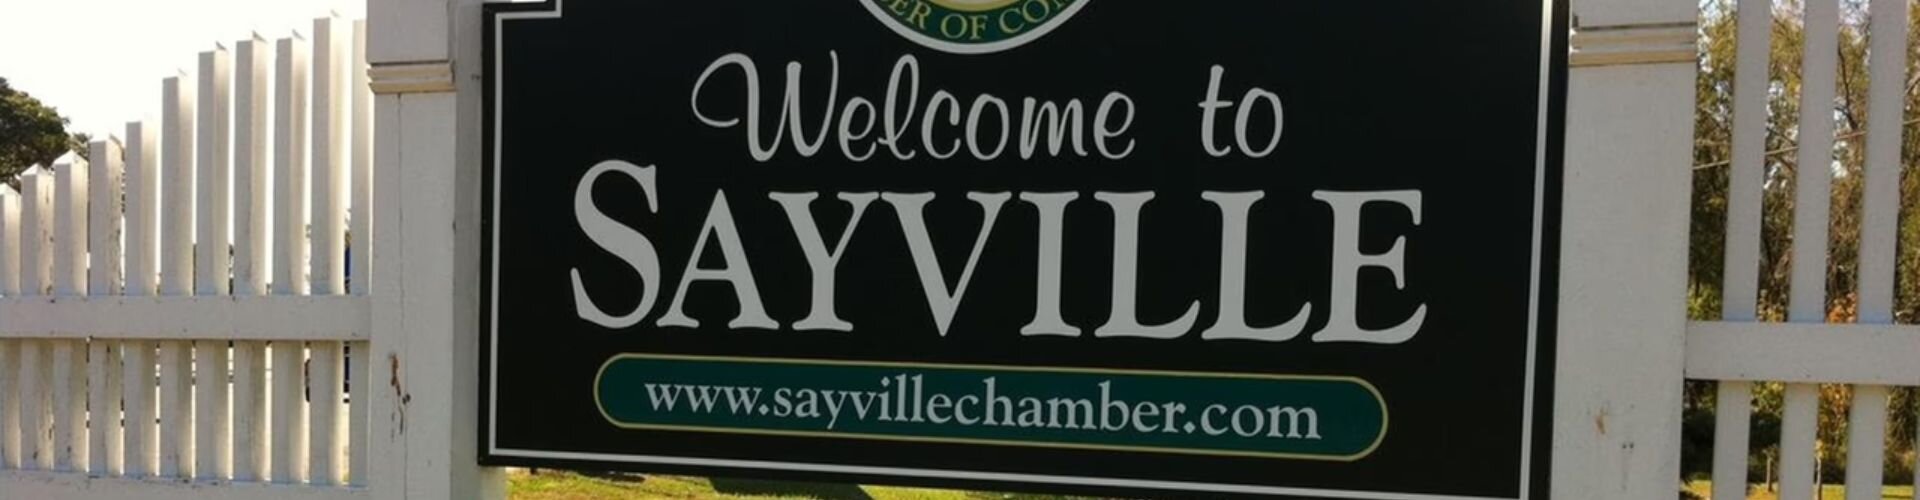 West Sayville - Cash Buyers in Long Island